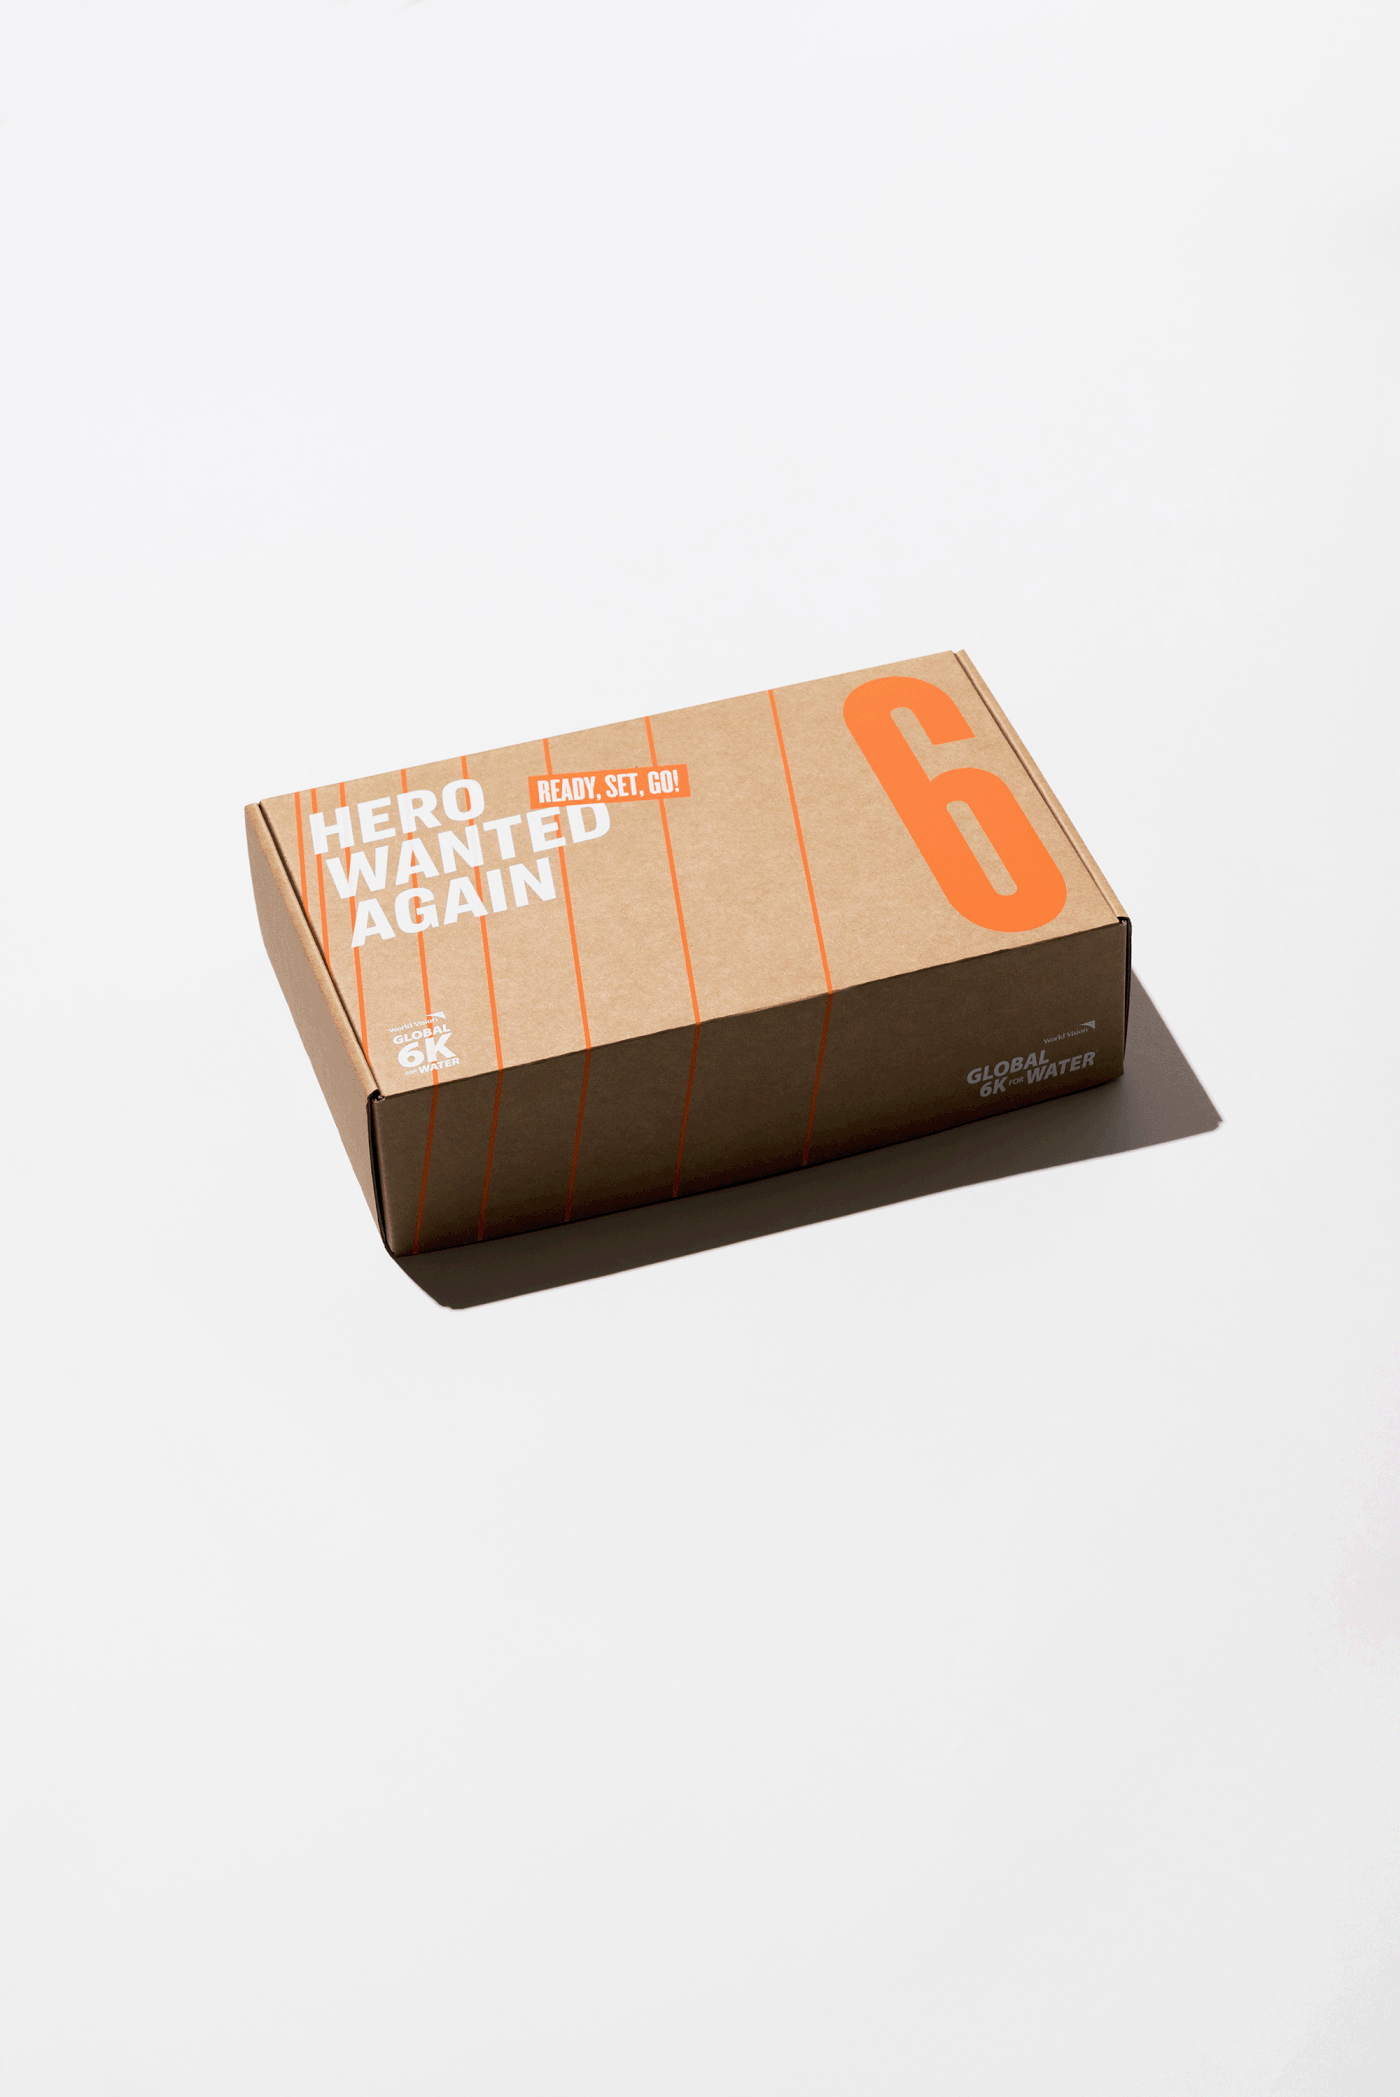 box condensed font Duotone Global 6K lines orange packaging design White World Vision